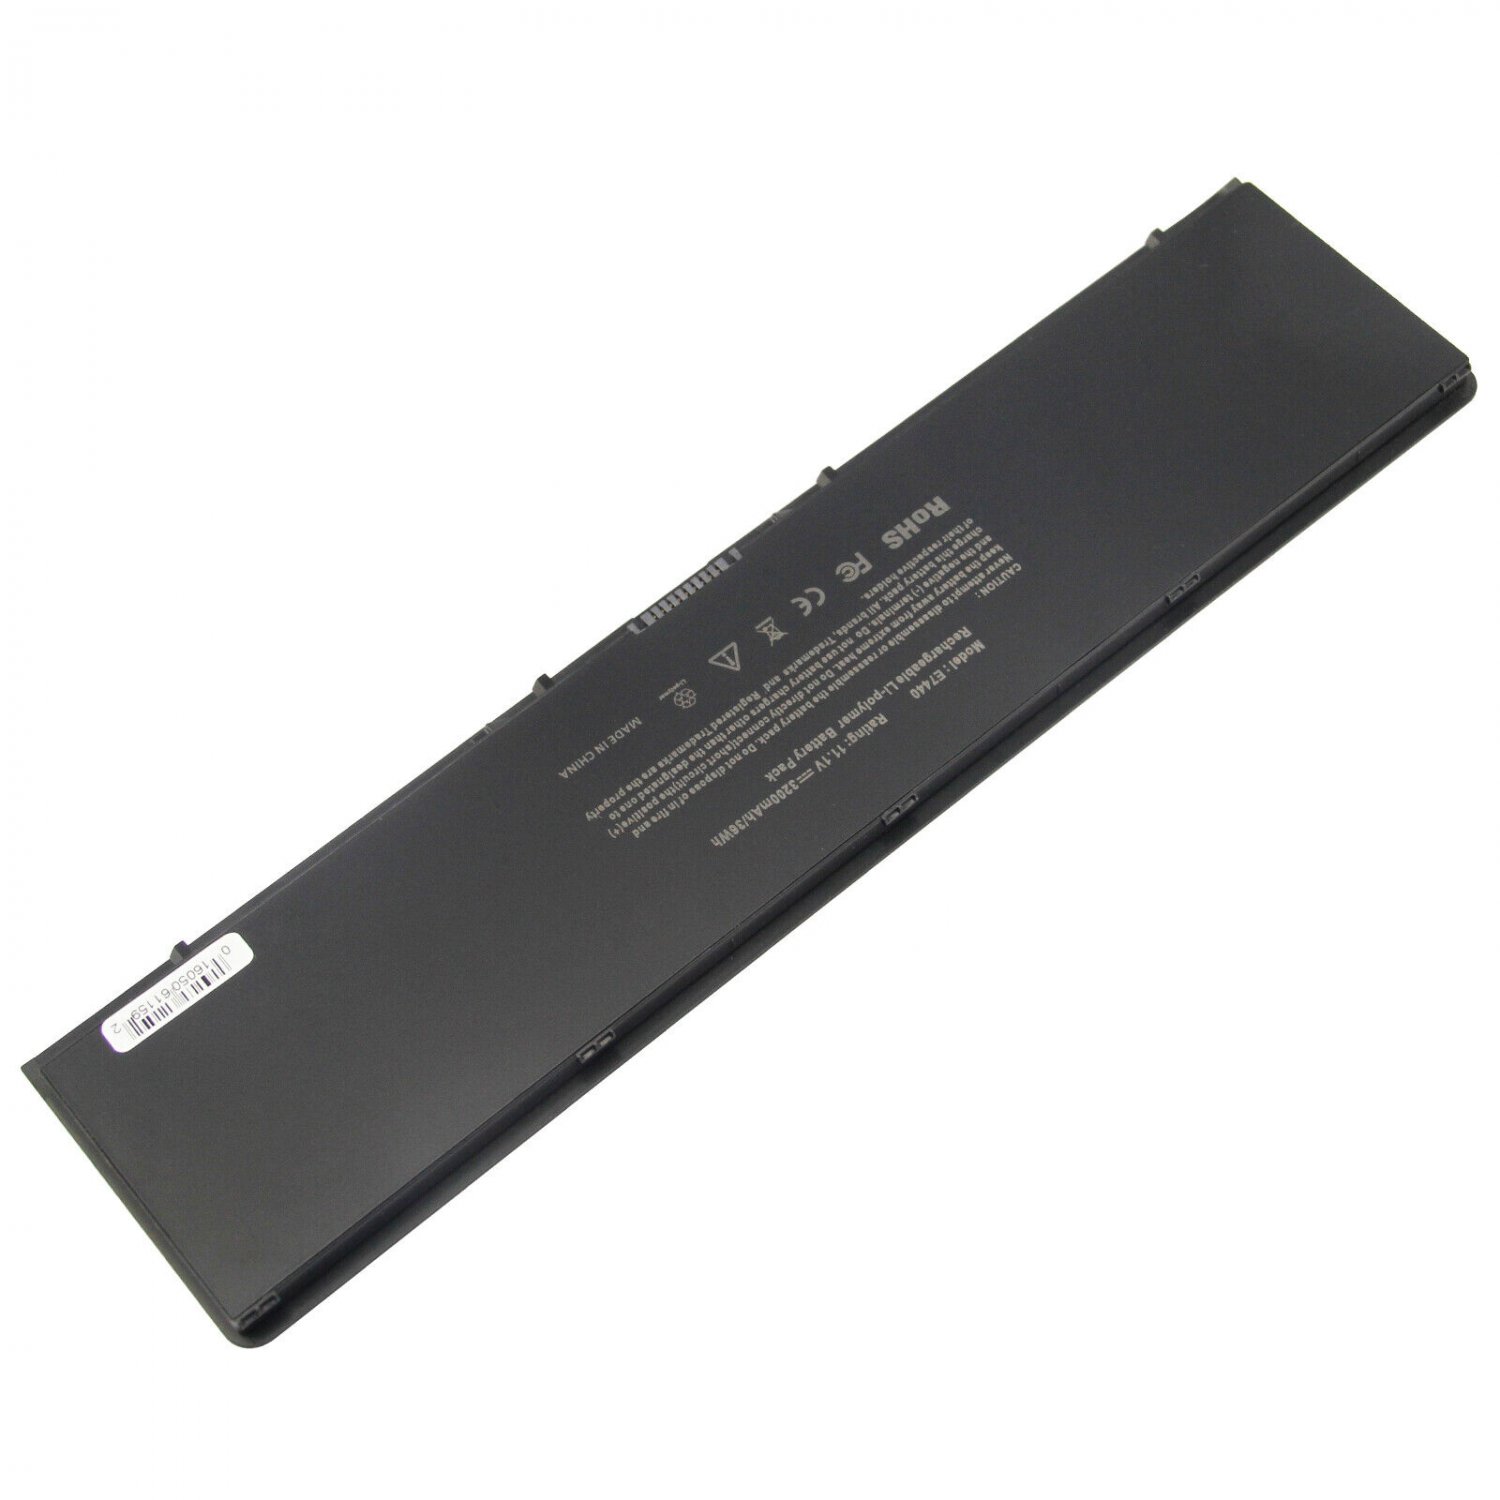 New Battery for Dell Latitude E7420 E7440 E7450 3RNFD G95J5 V8XN3 34GKR 0909H5 F